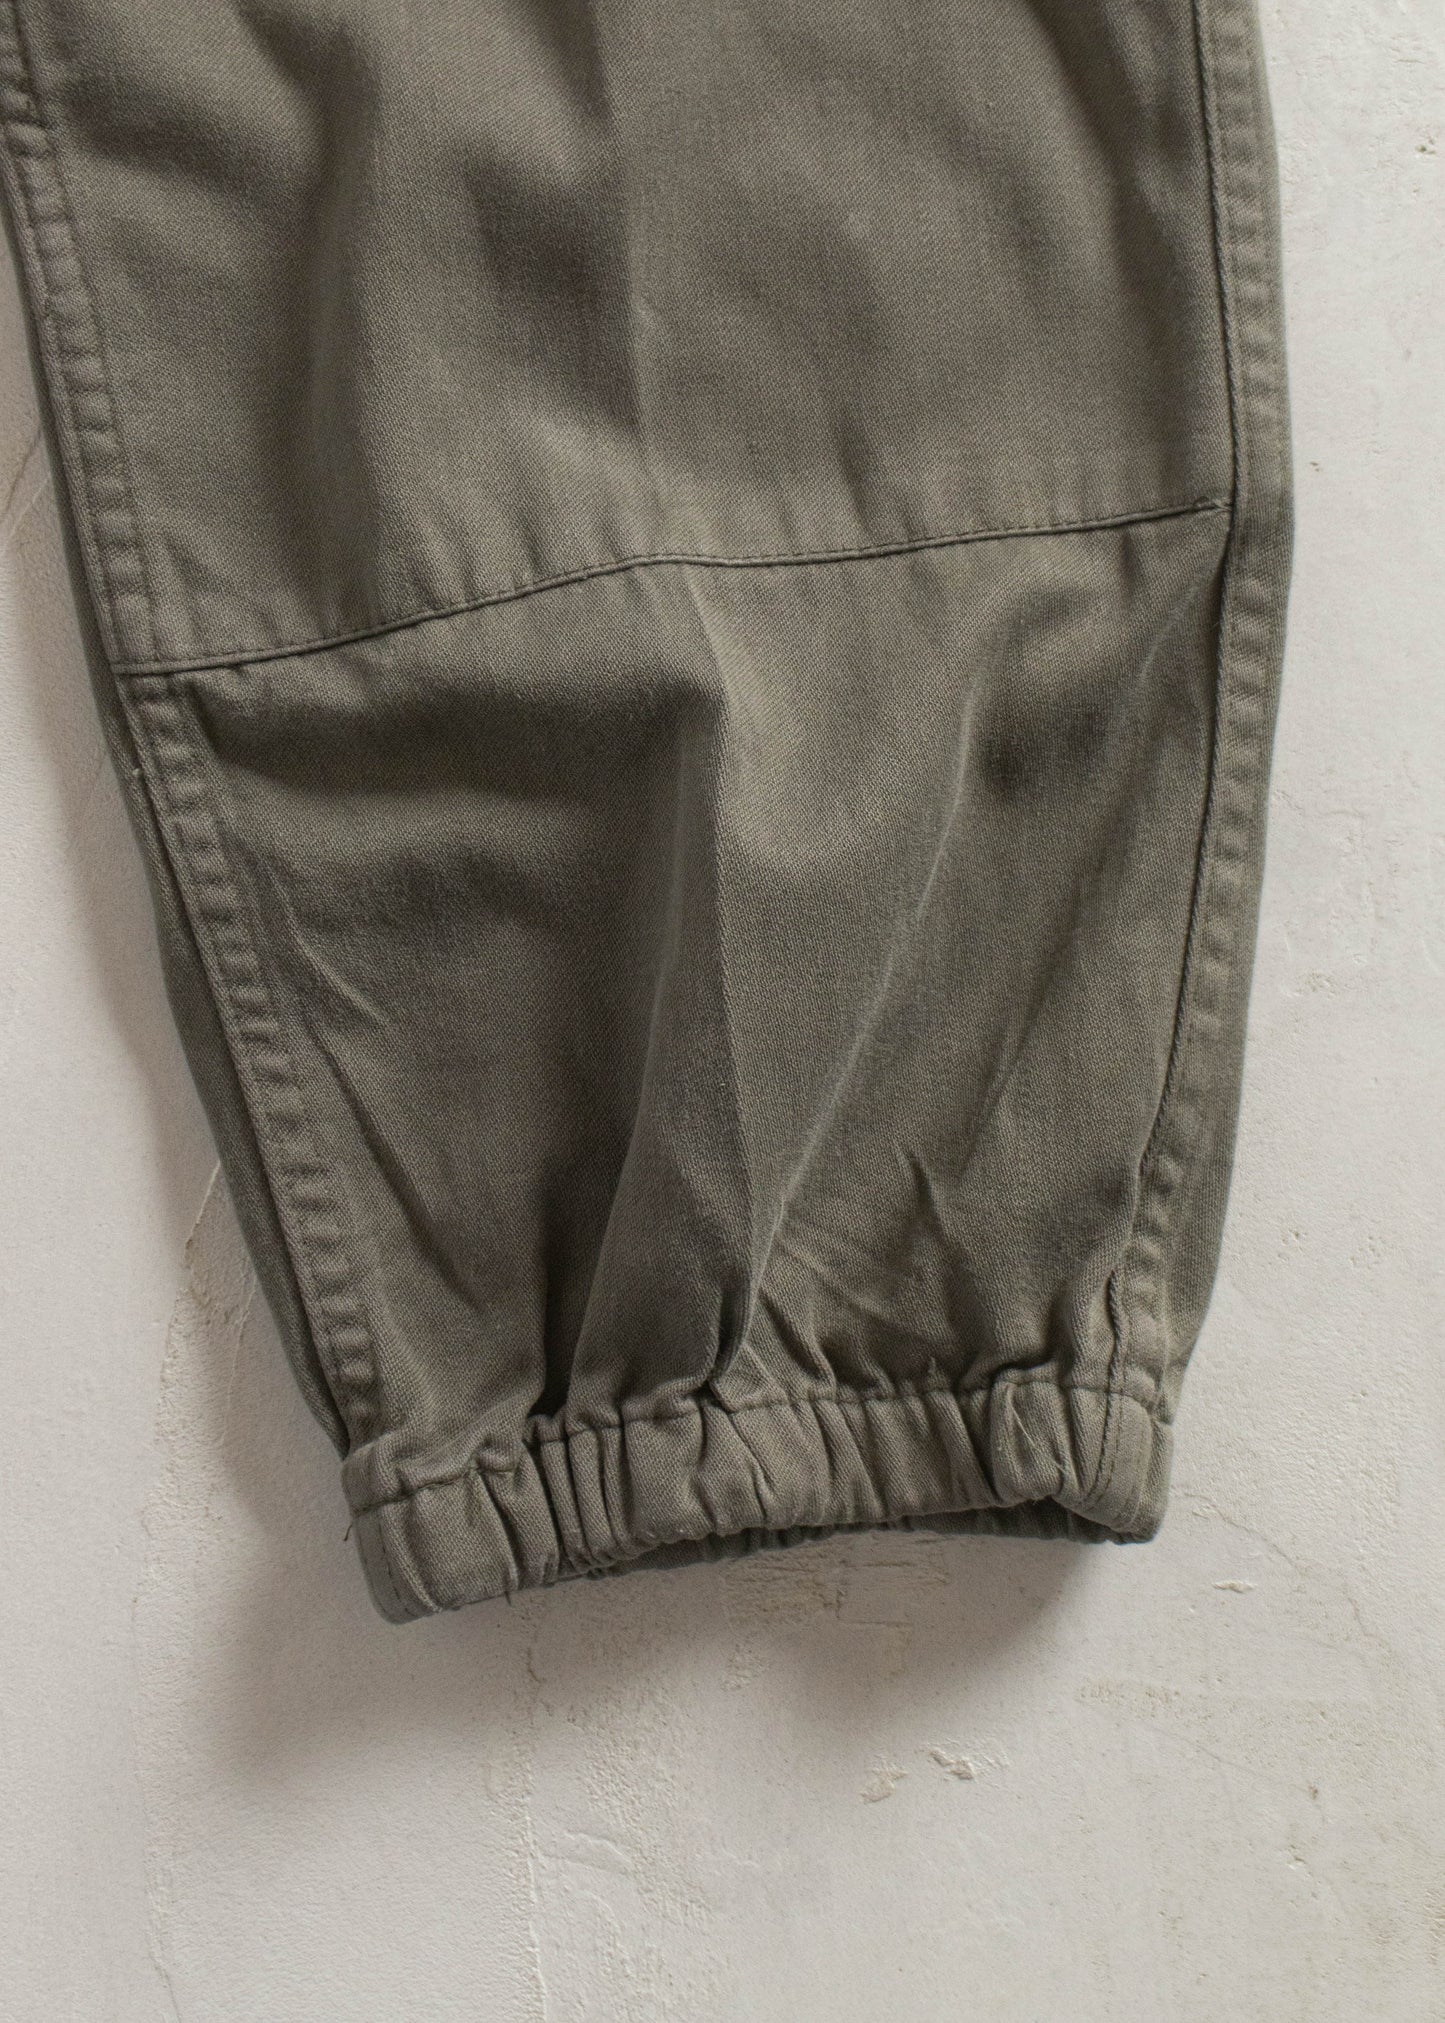 Vintage 1980s Paul Boyé French Military Cargo Pants Size Women's 25